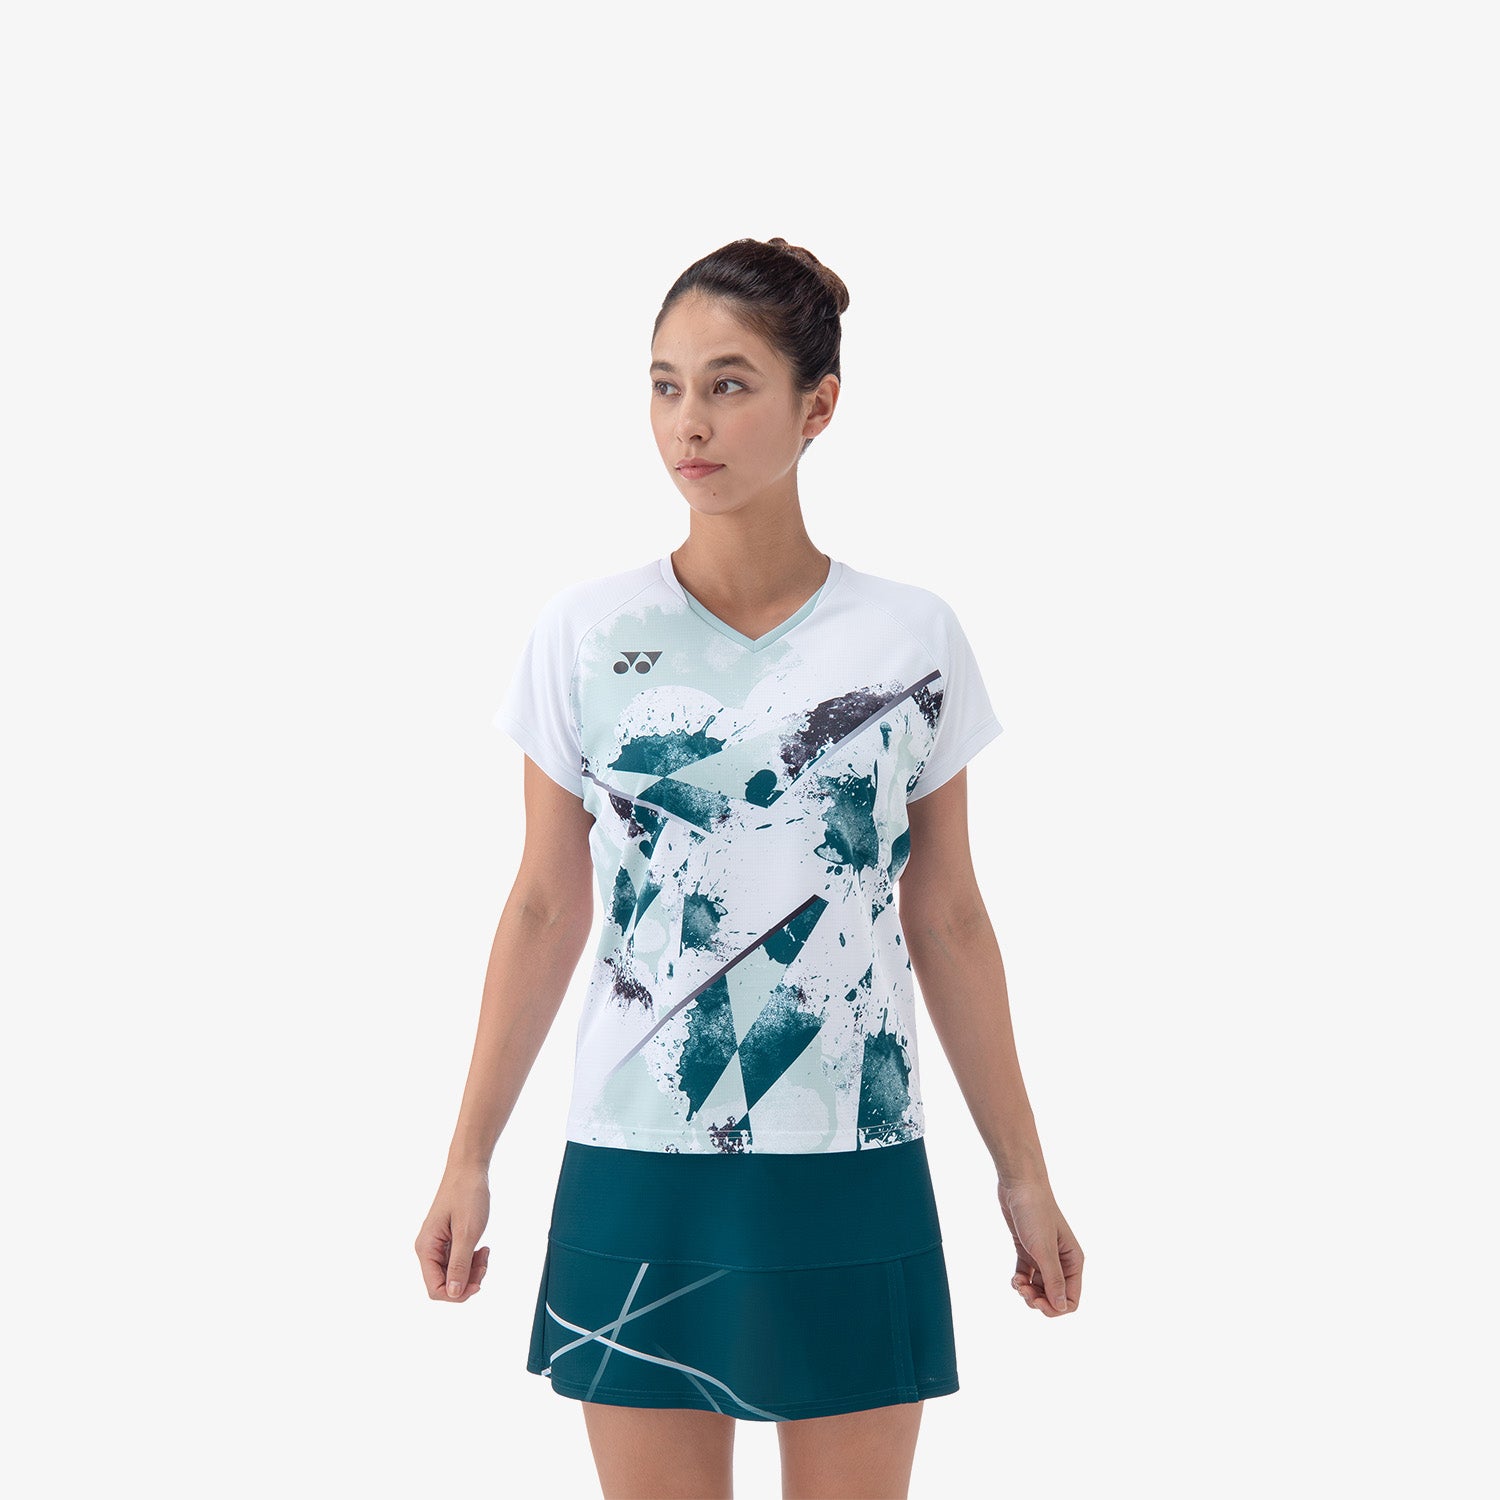 Yonex Women's Crew Neck Tournament Shirt 20771W (White)